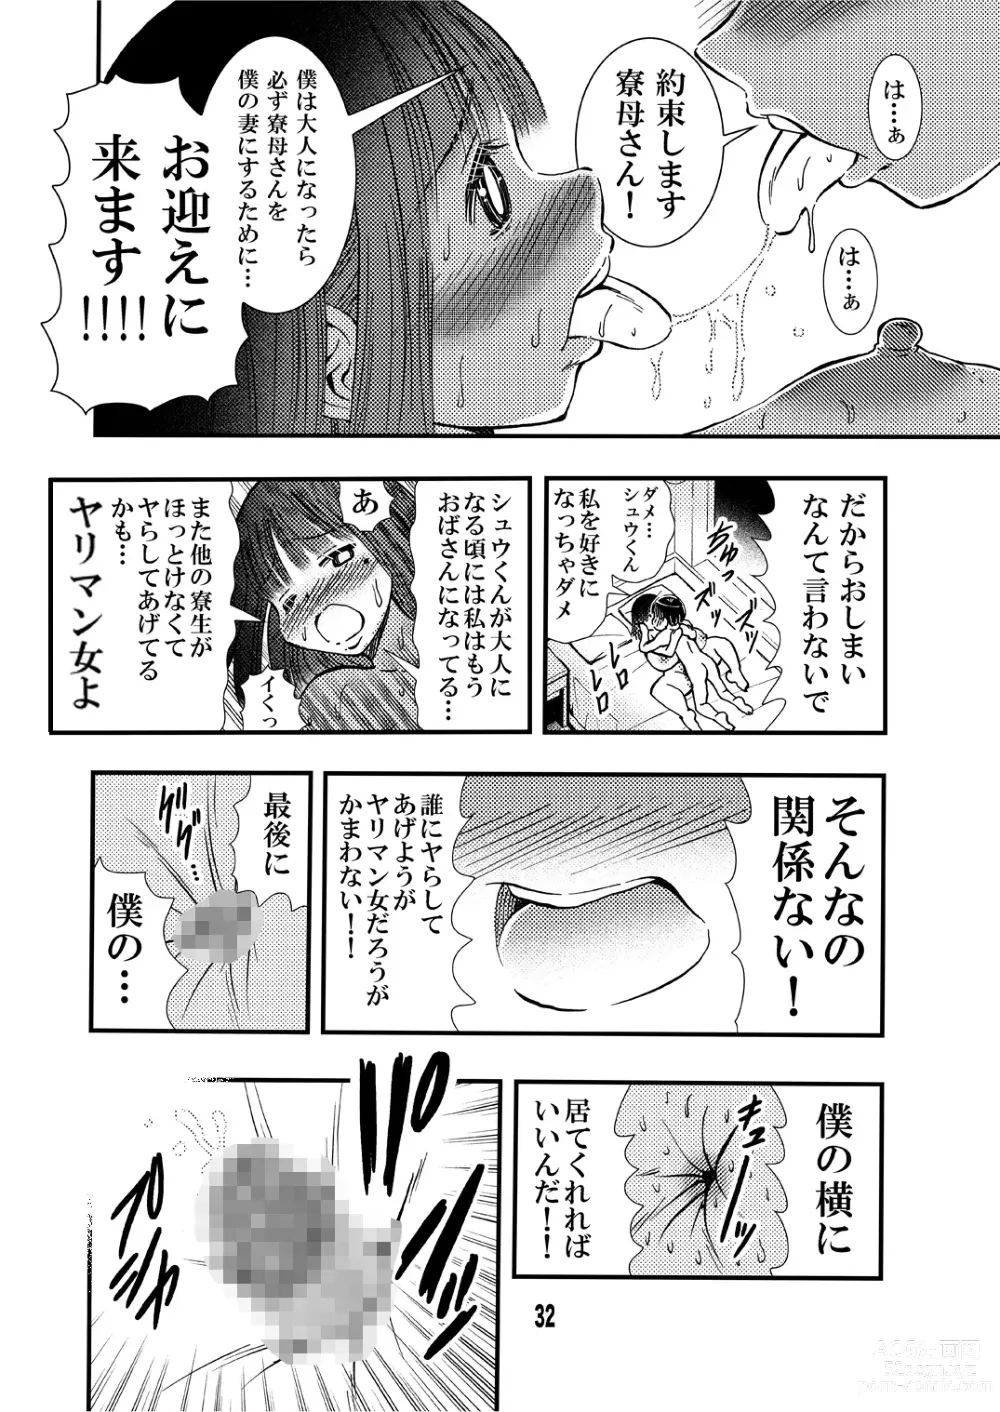 Page 32 of doujinshi Ryoubo-san no Oppai wa Kao yori Ookii